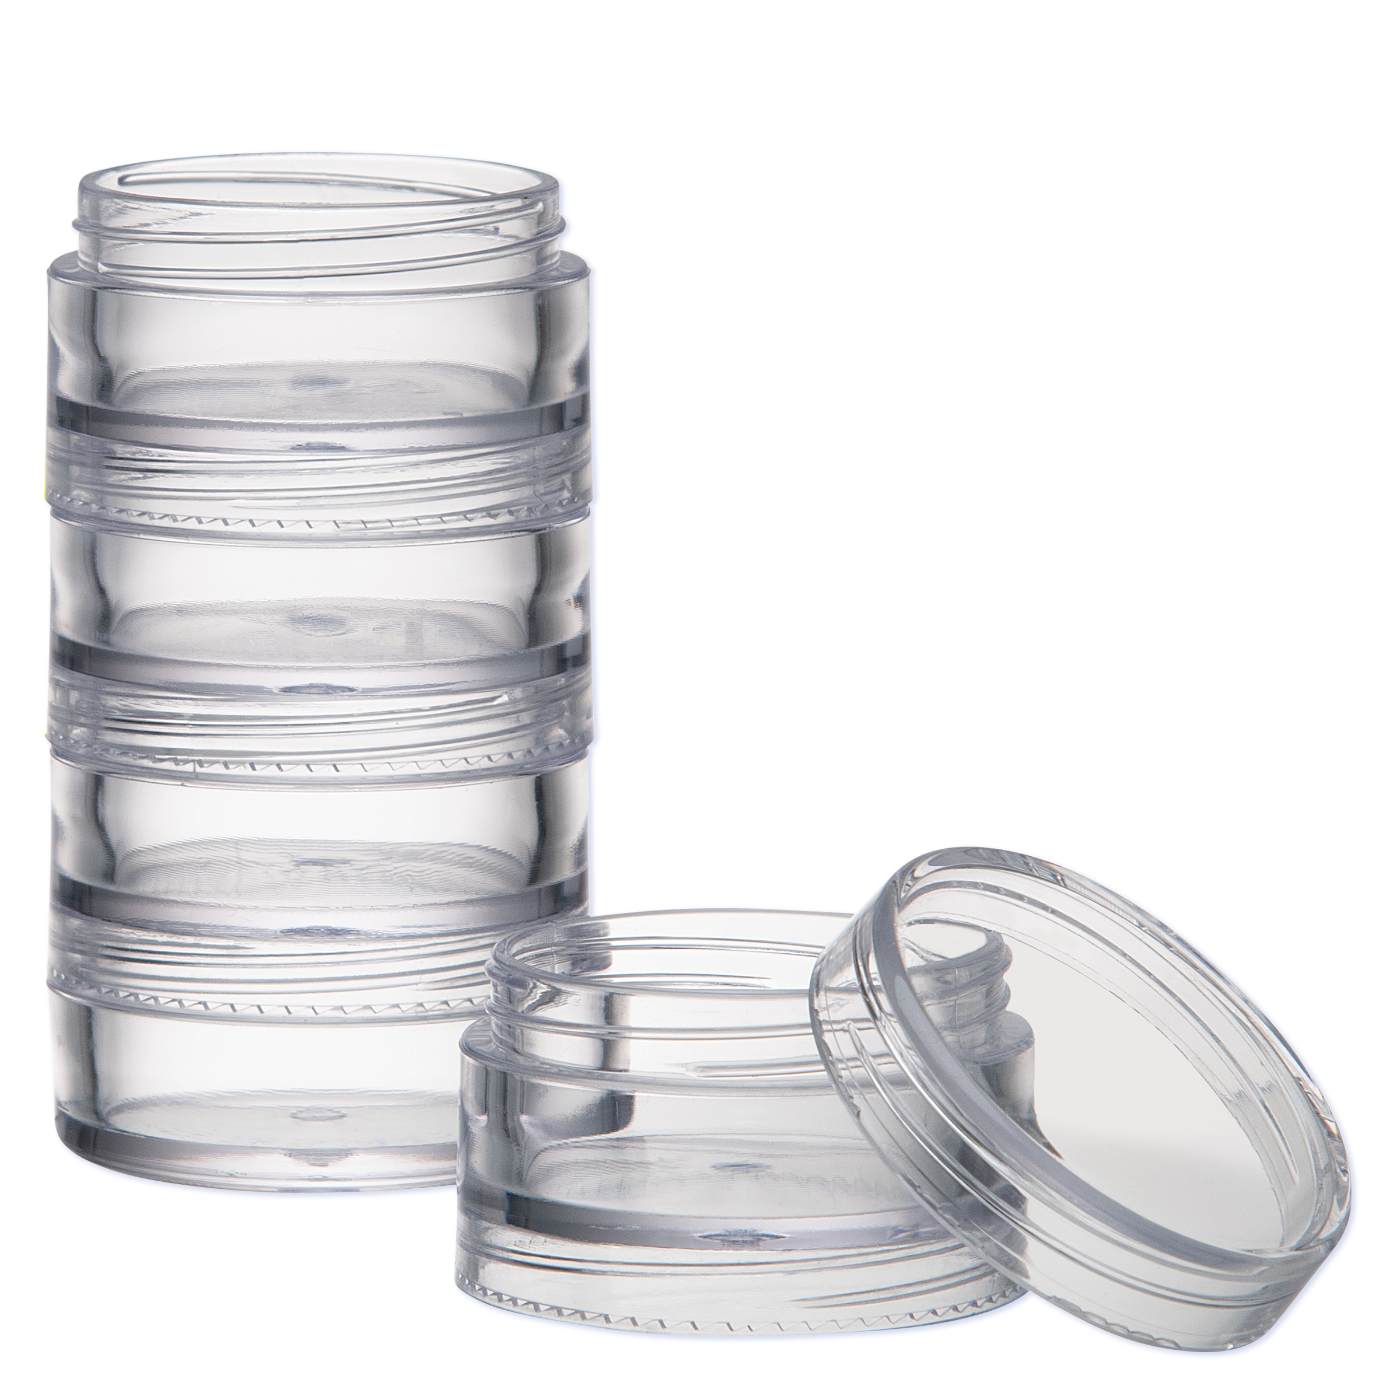 5-Tier Stackable Jar, 3 mL each tier